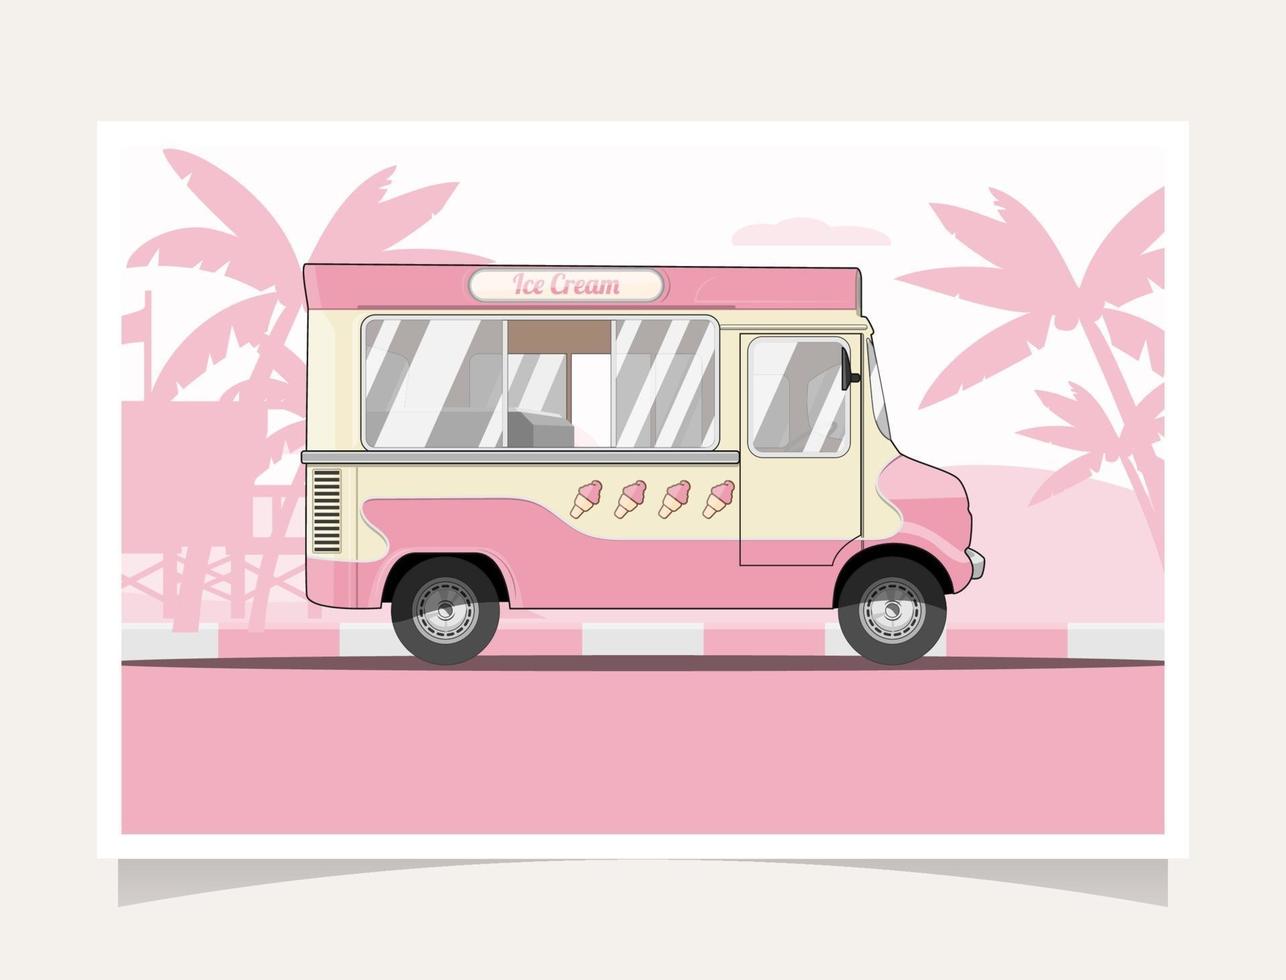 Flat Design Ice Cream Truck vector